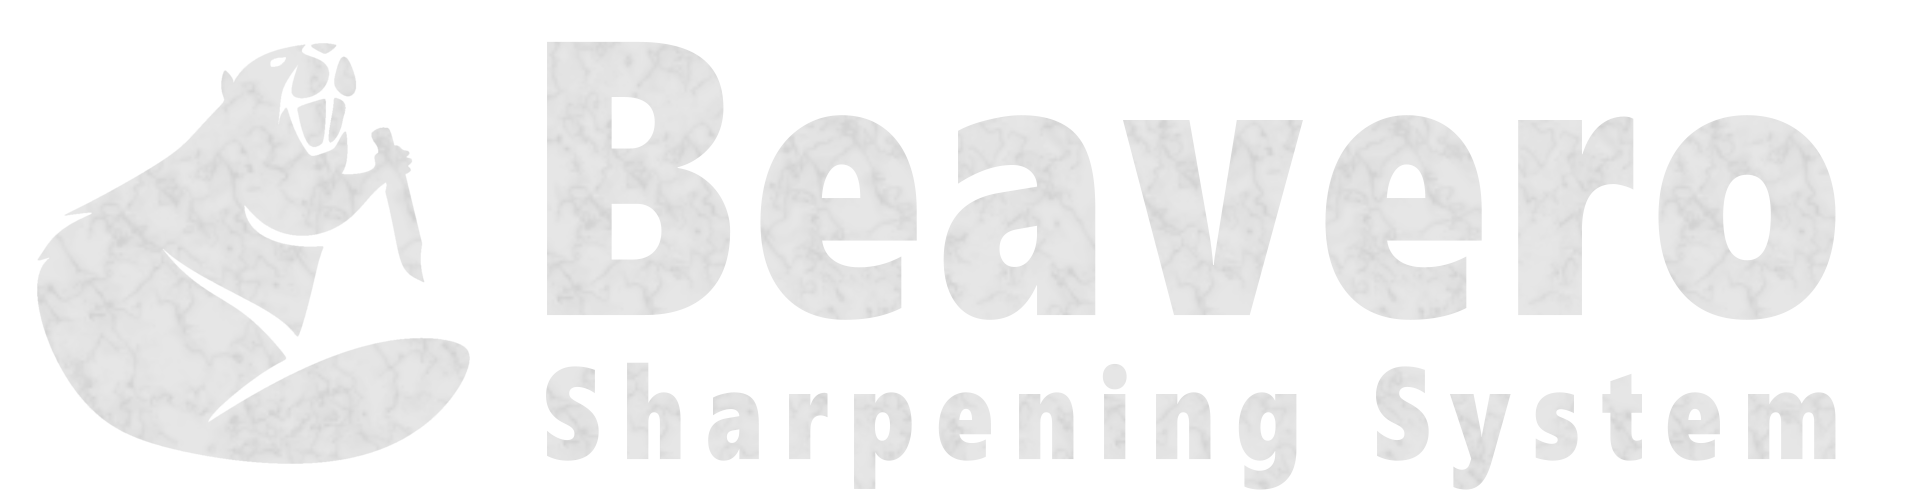 Beavero Sharpening System